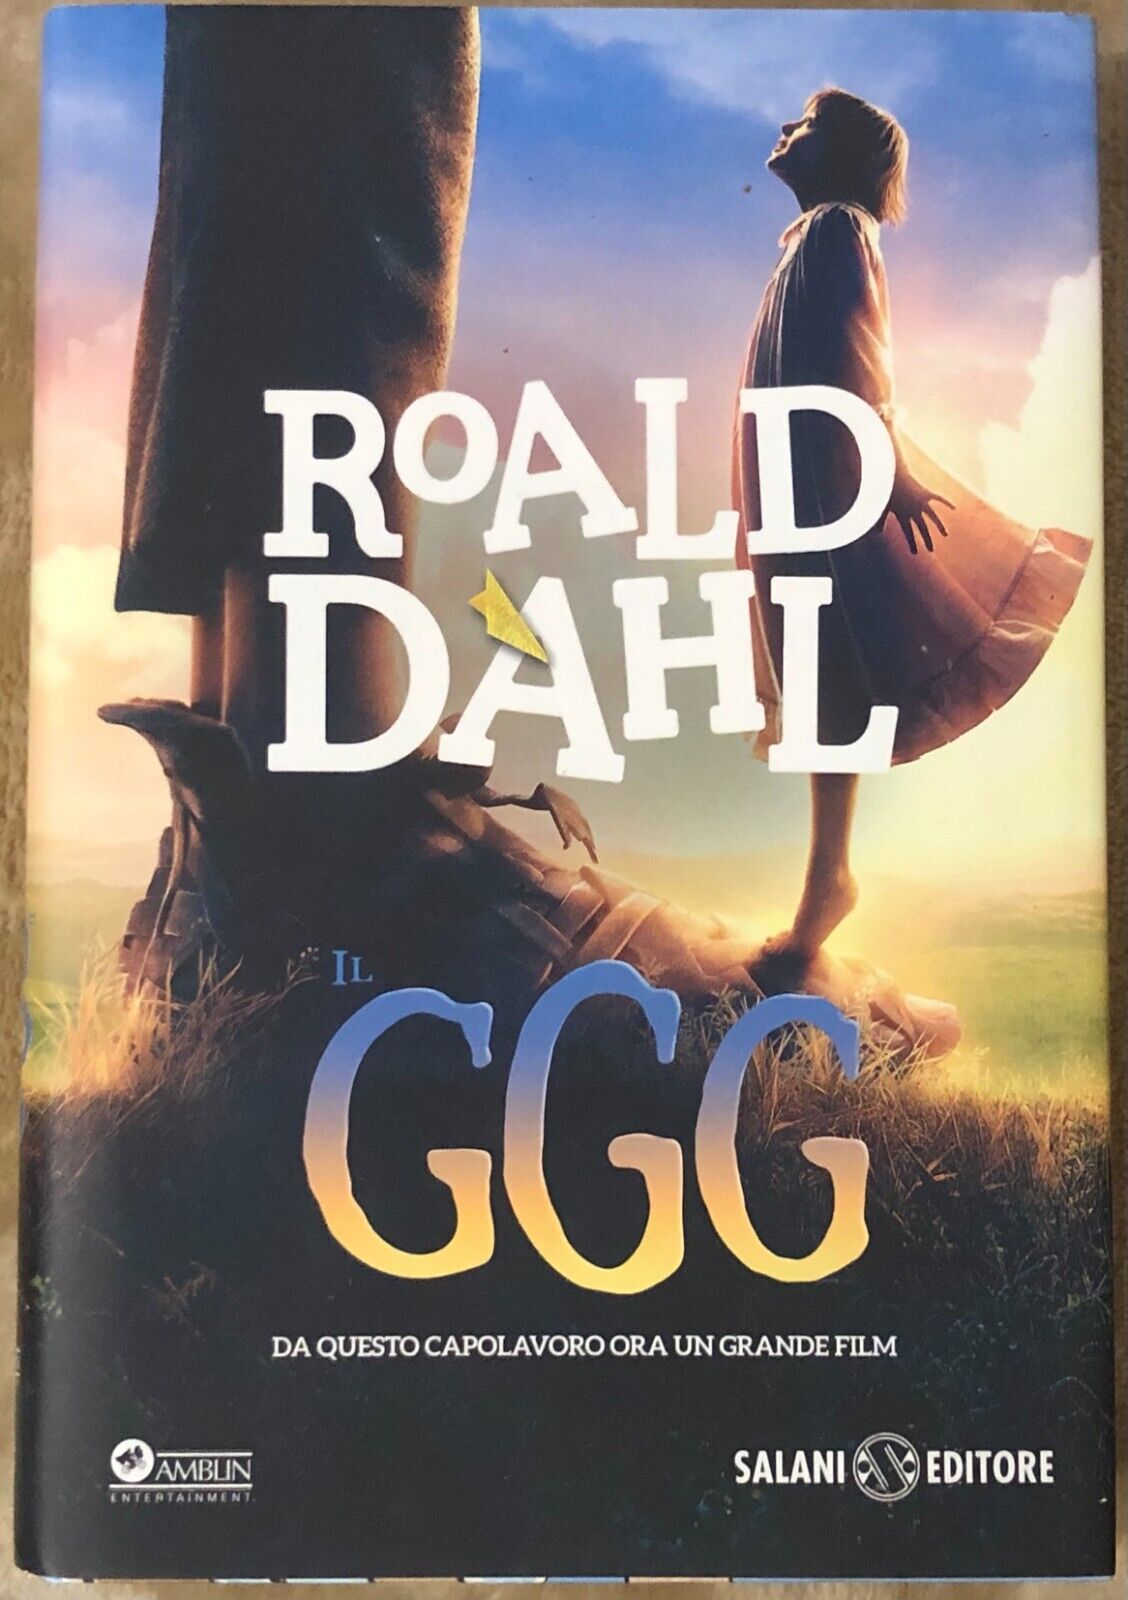 Il GGG di Roald Dahl,  2016,  Salani Editore